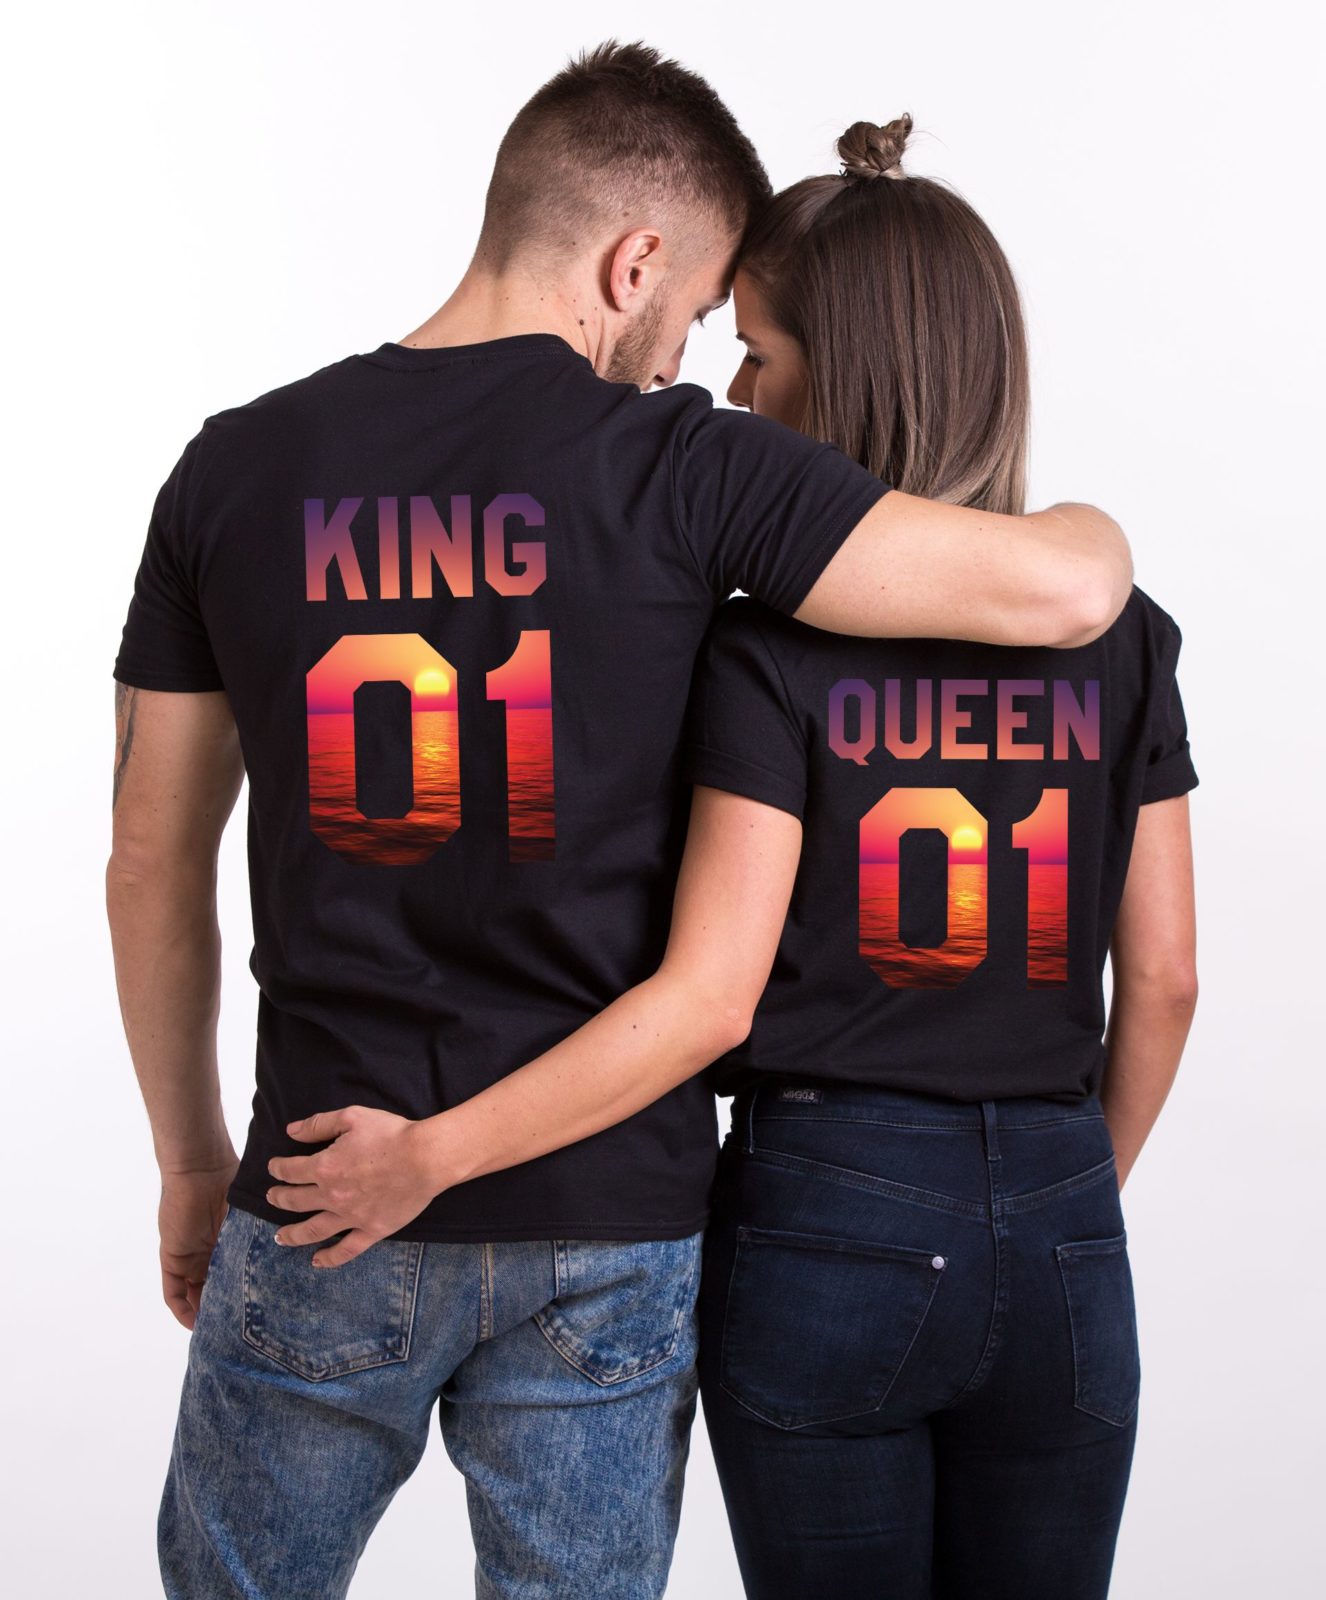 King Queen Sunset Shirts, Matching Couples Shirts